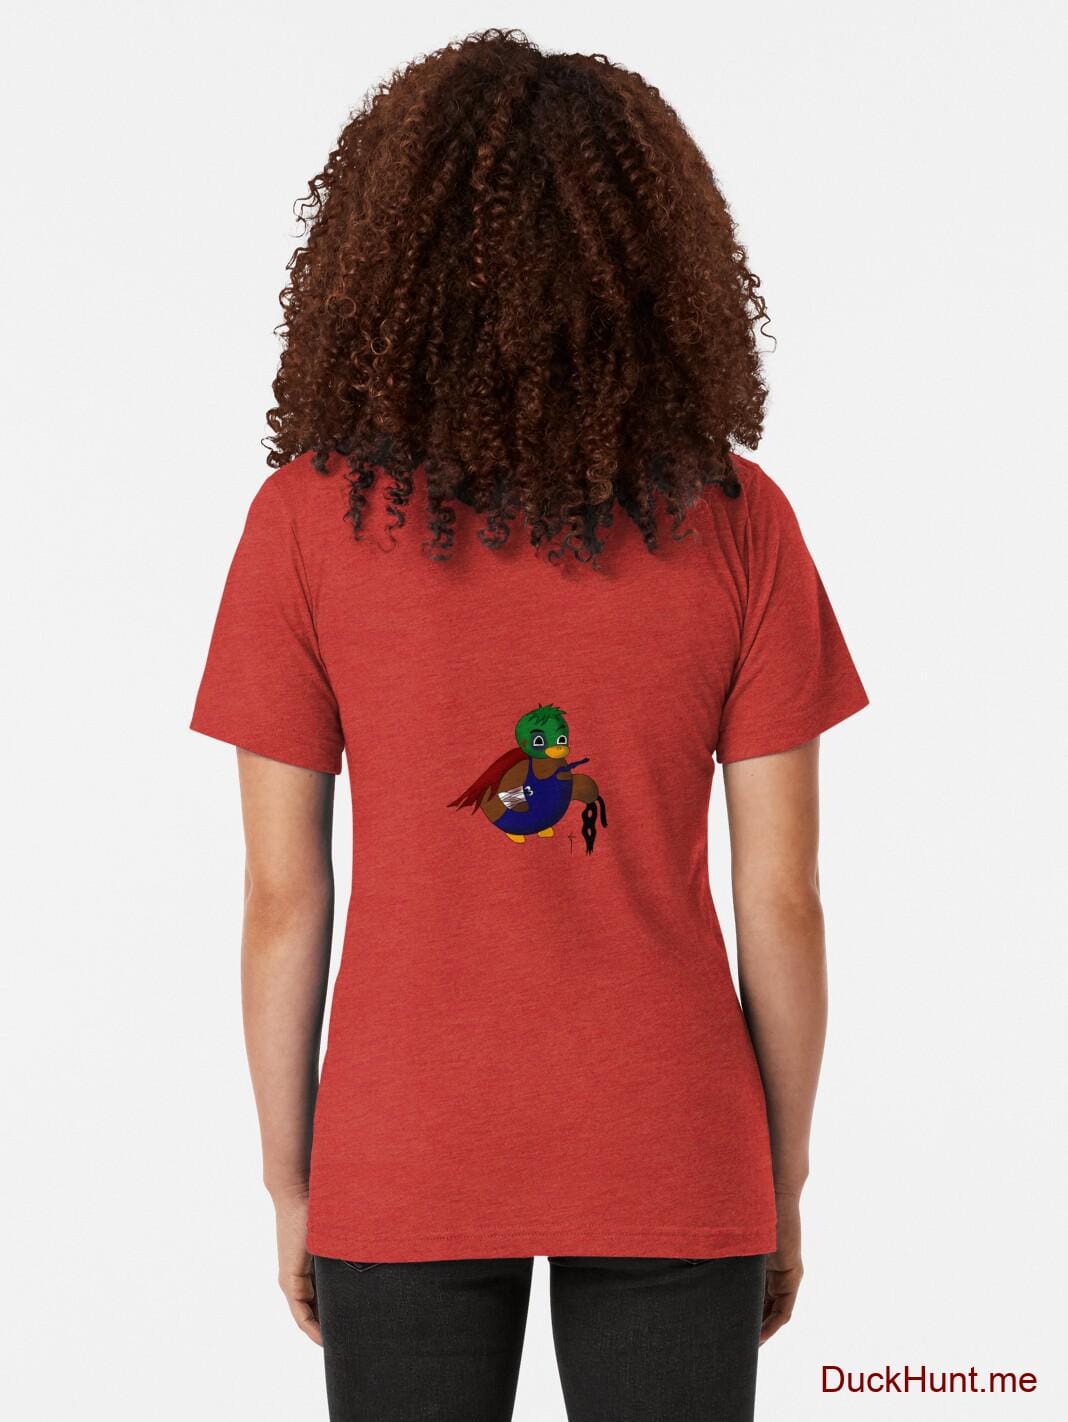 Dead DuckHunt Boss (smokeless) Red Tri-blend T-Shirt (Back printed) alternative image 1